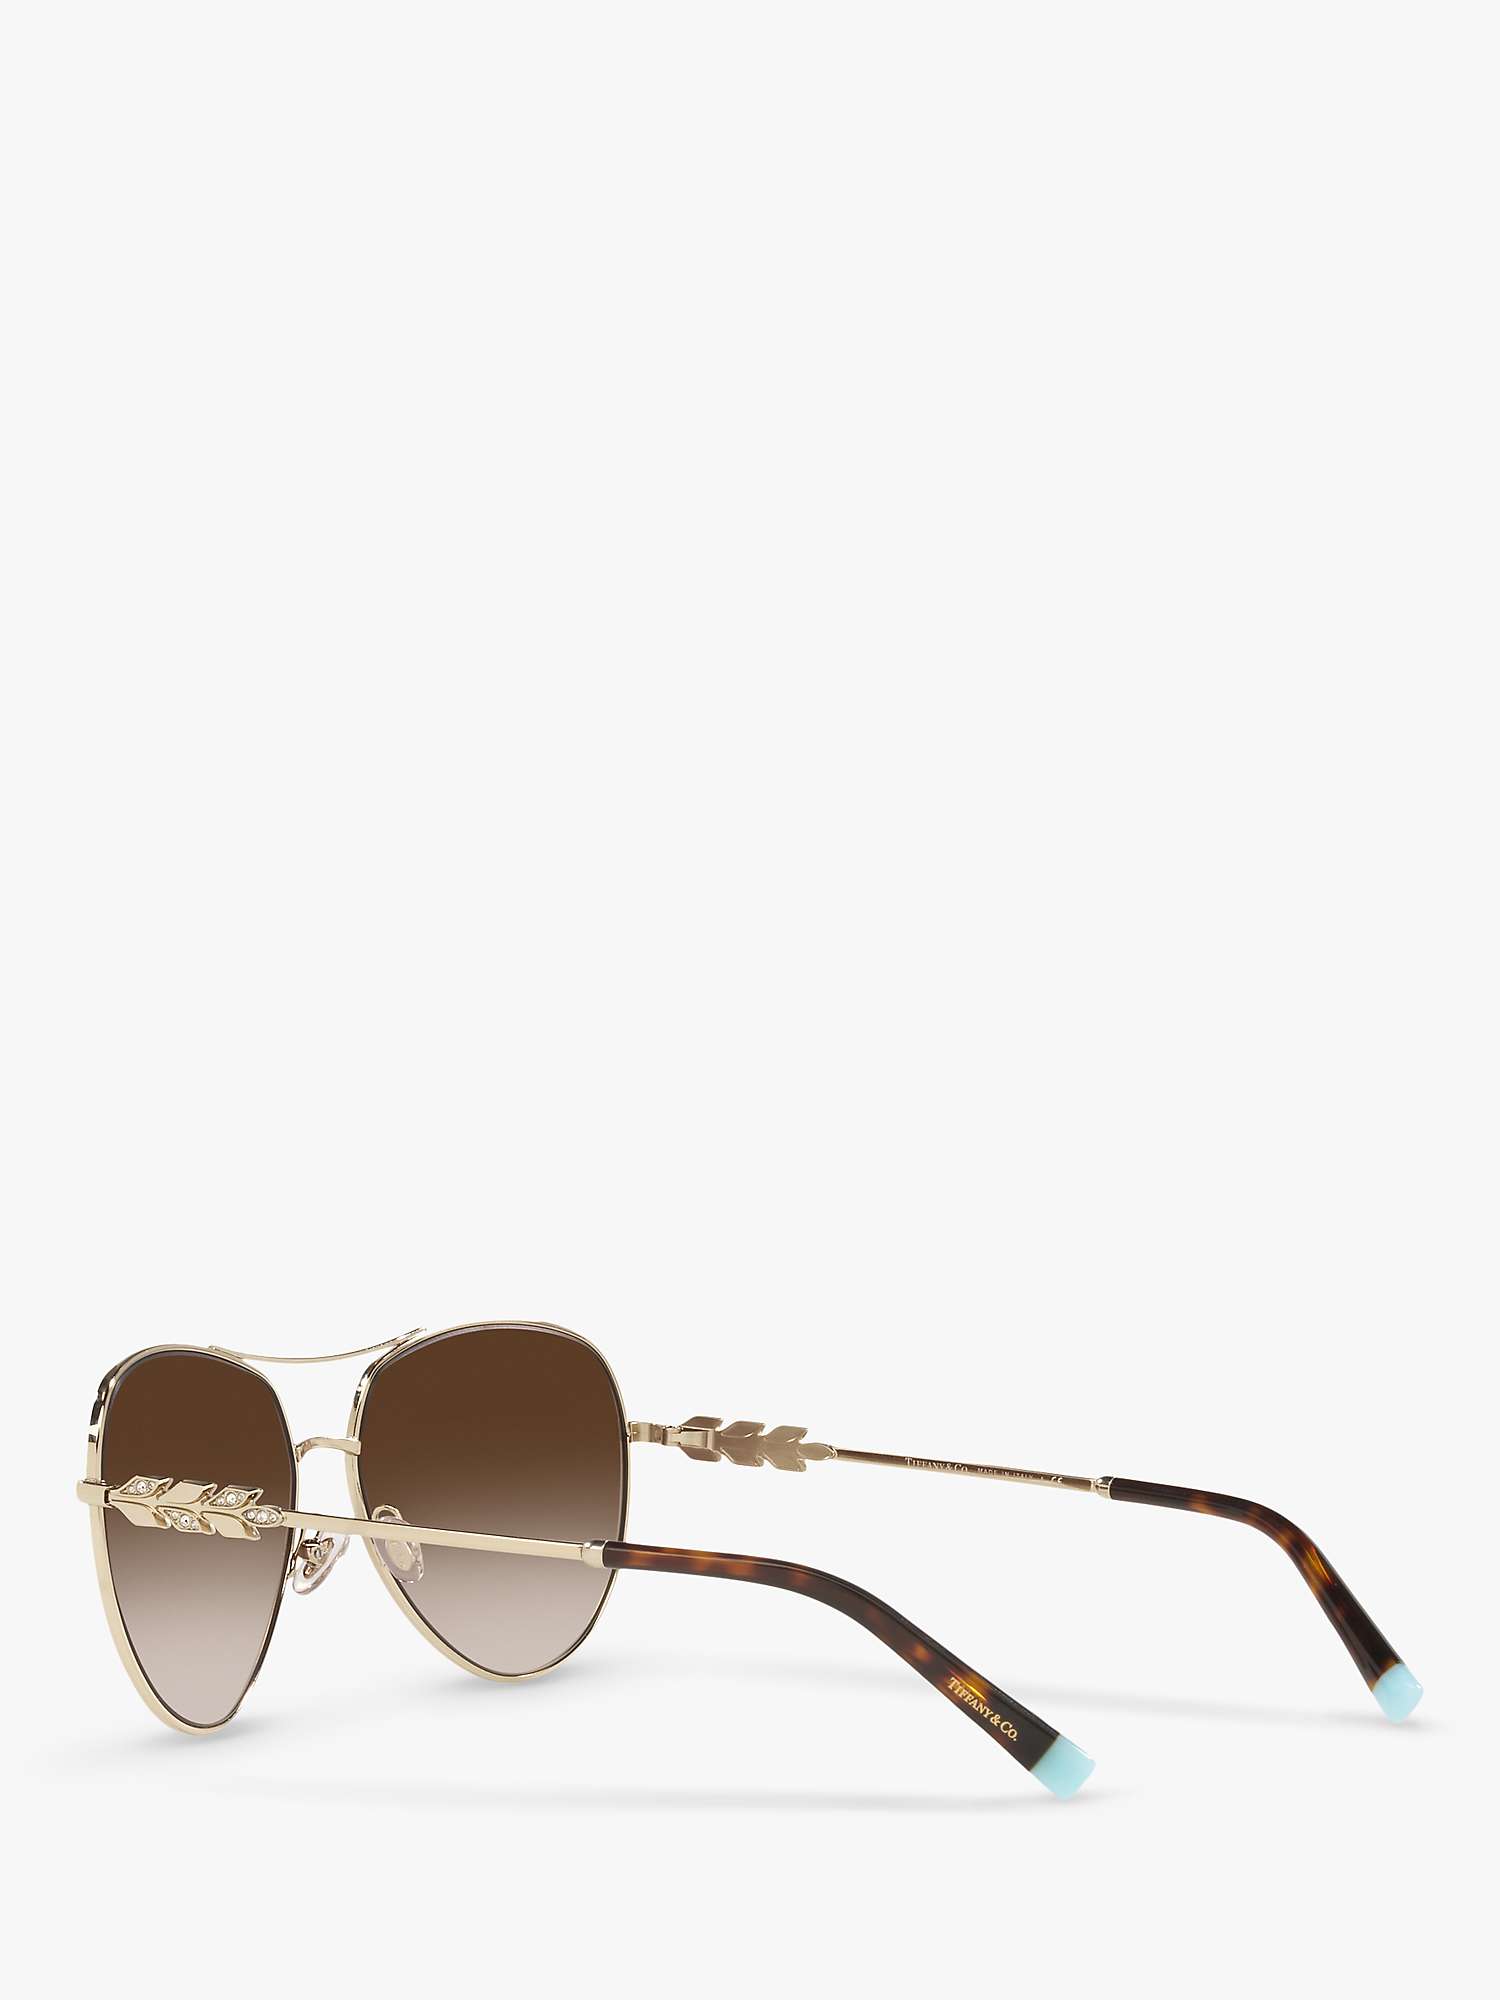 Buy Tiffany & Co TF3083B Women's Pilot Sunglasses, Pale Gold/Brown Gradient Online at johnlewis.com